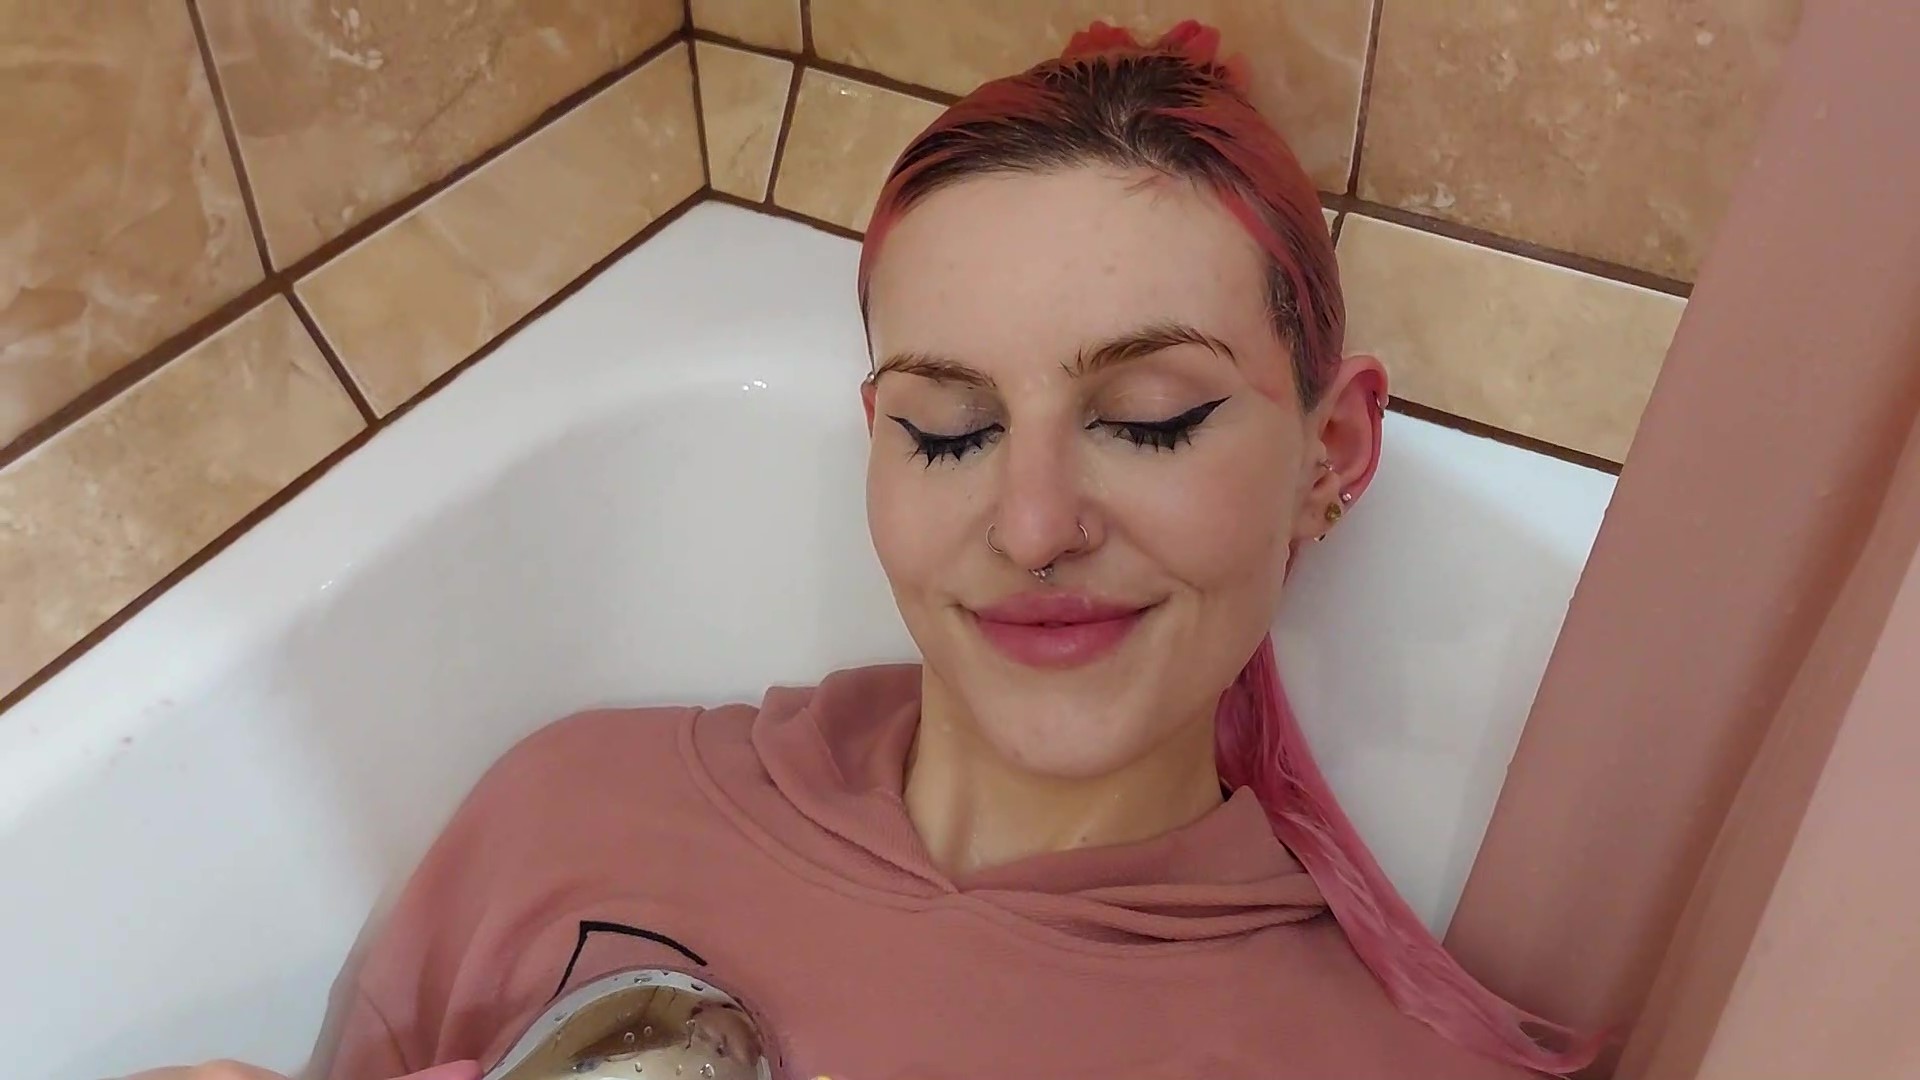 Hairwash video by Pinkie - frame at 13m12s